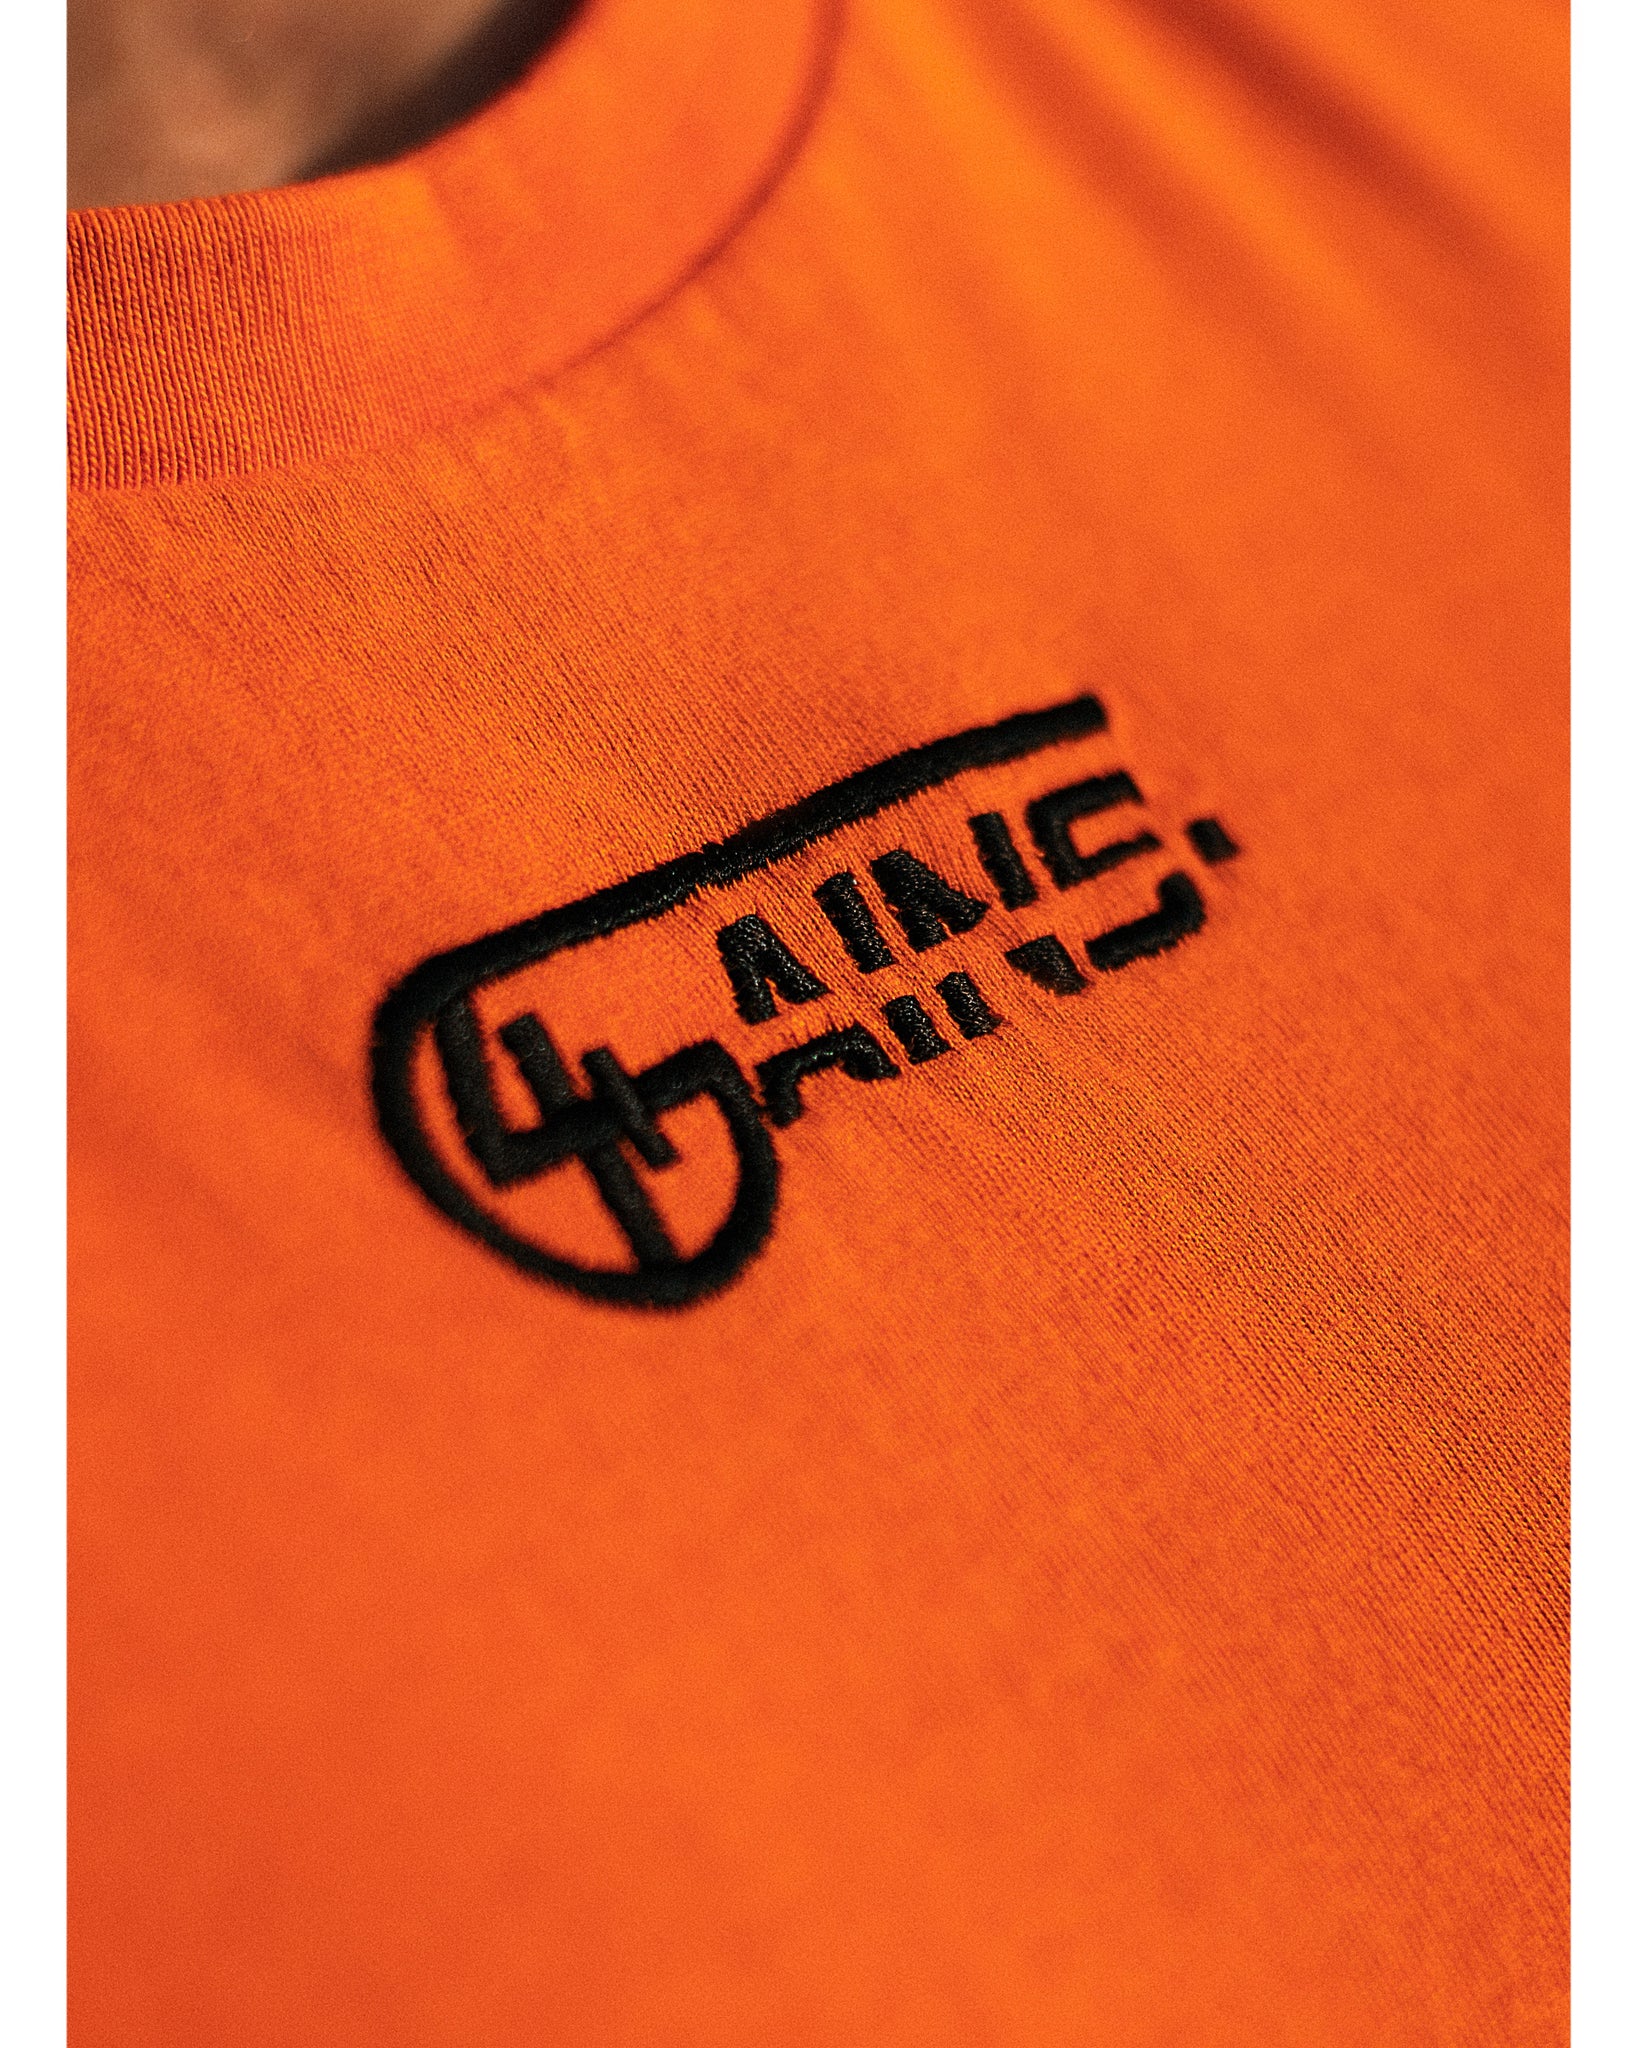 4GAINS basic unisex T-Shirt in orange/black